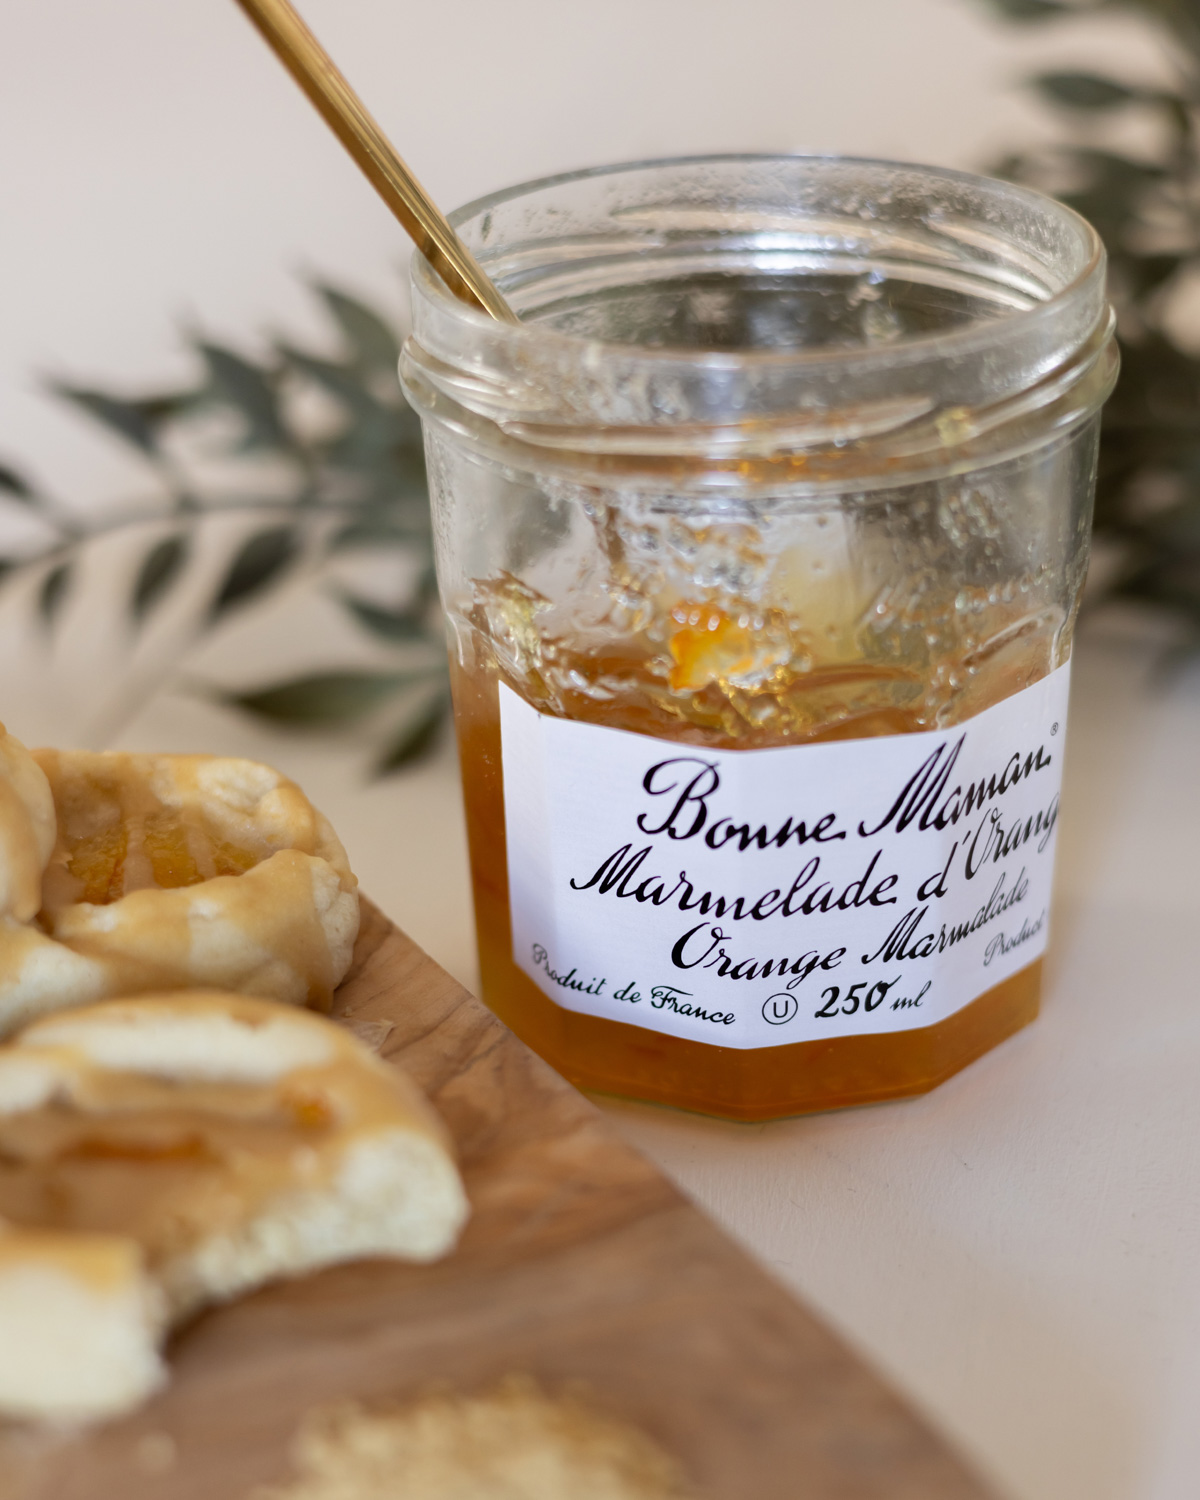 A jar of Bonne Maman marmalade with thumbprint cookies.